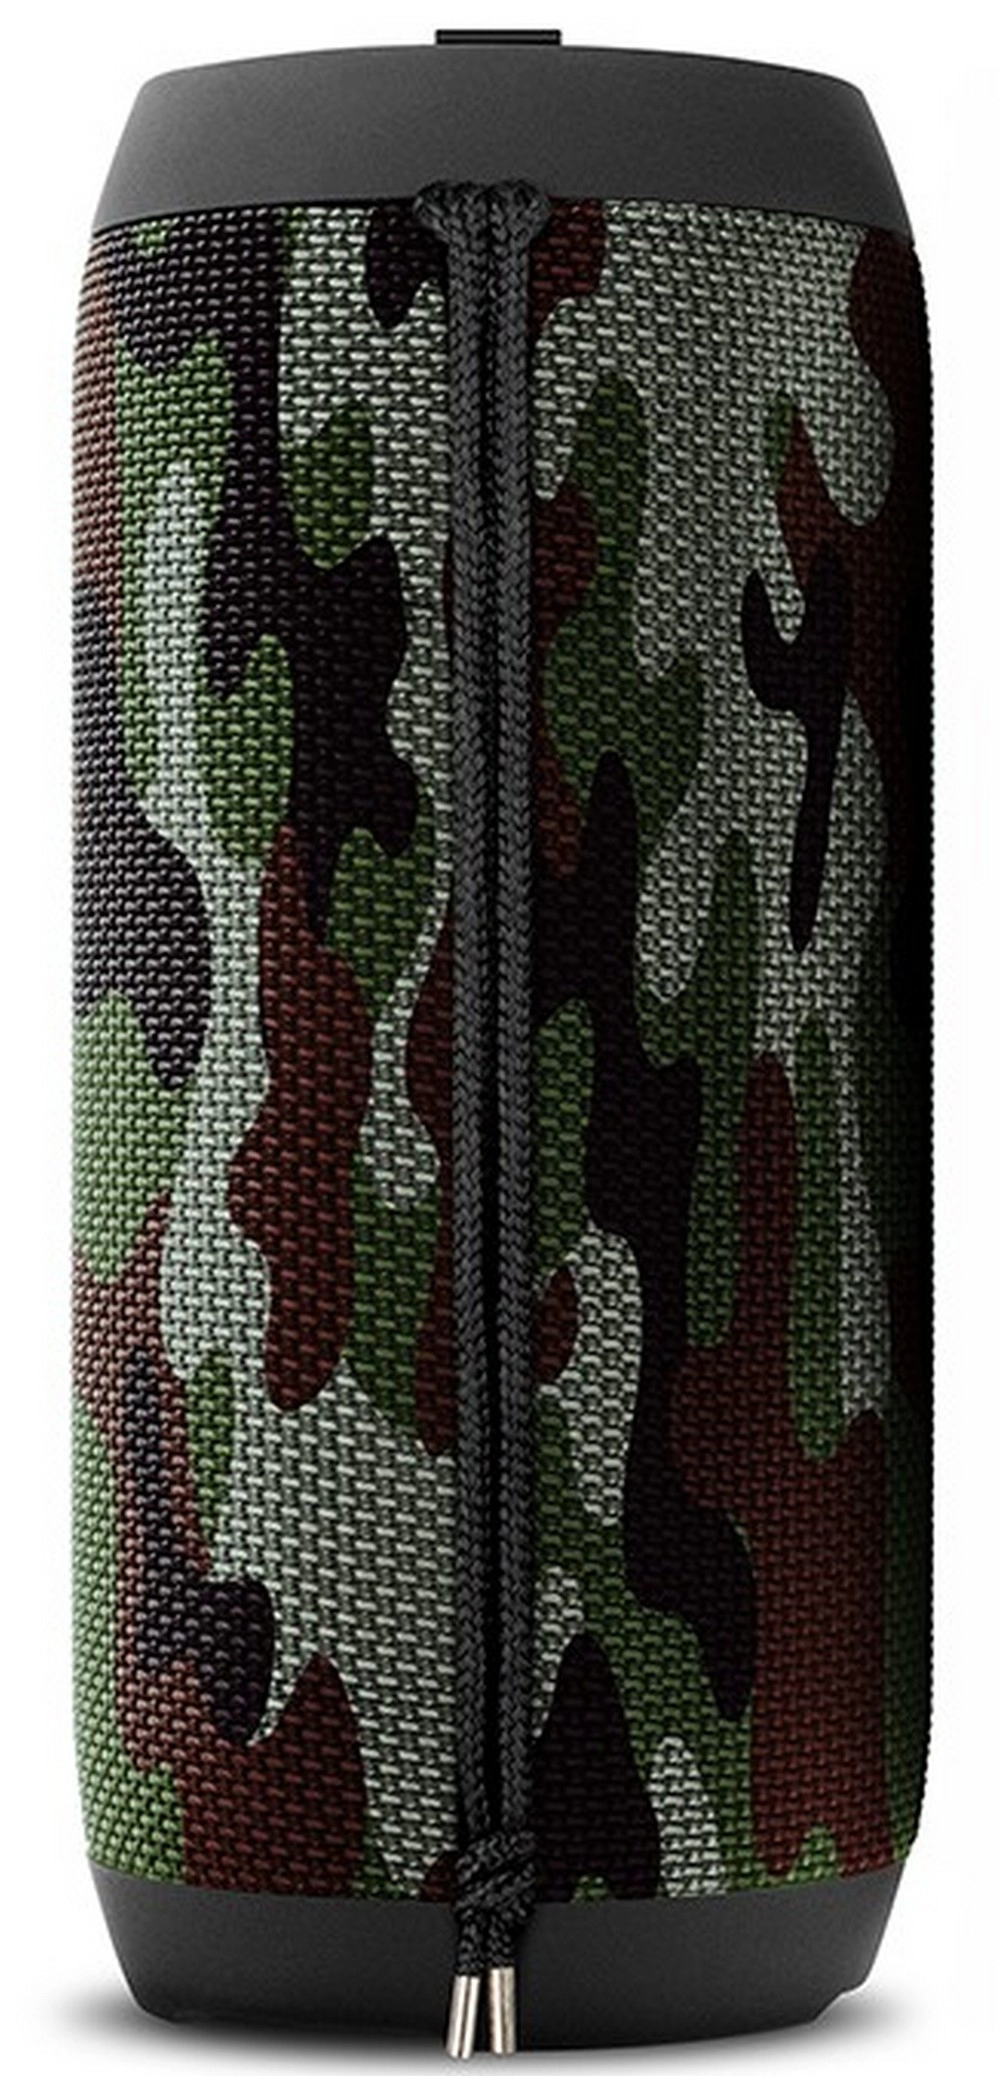 Sistem acustic Sven PS-210 12W, camouflage 